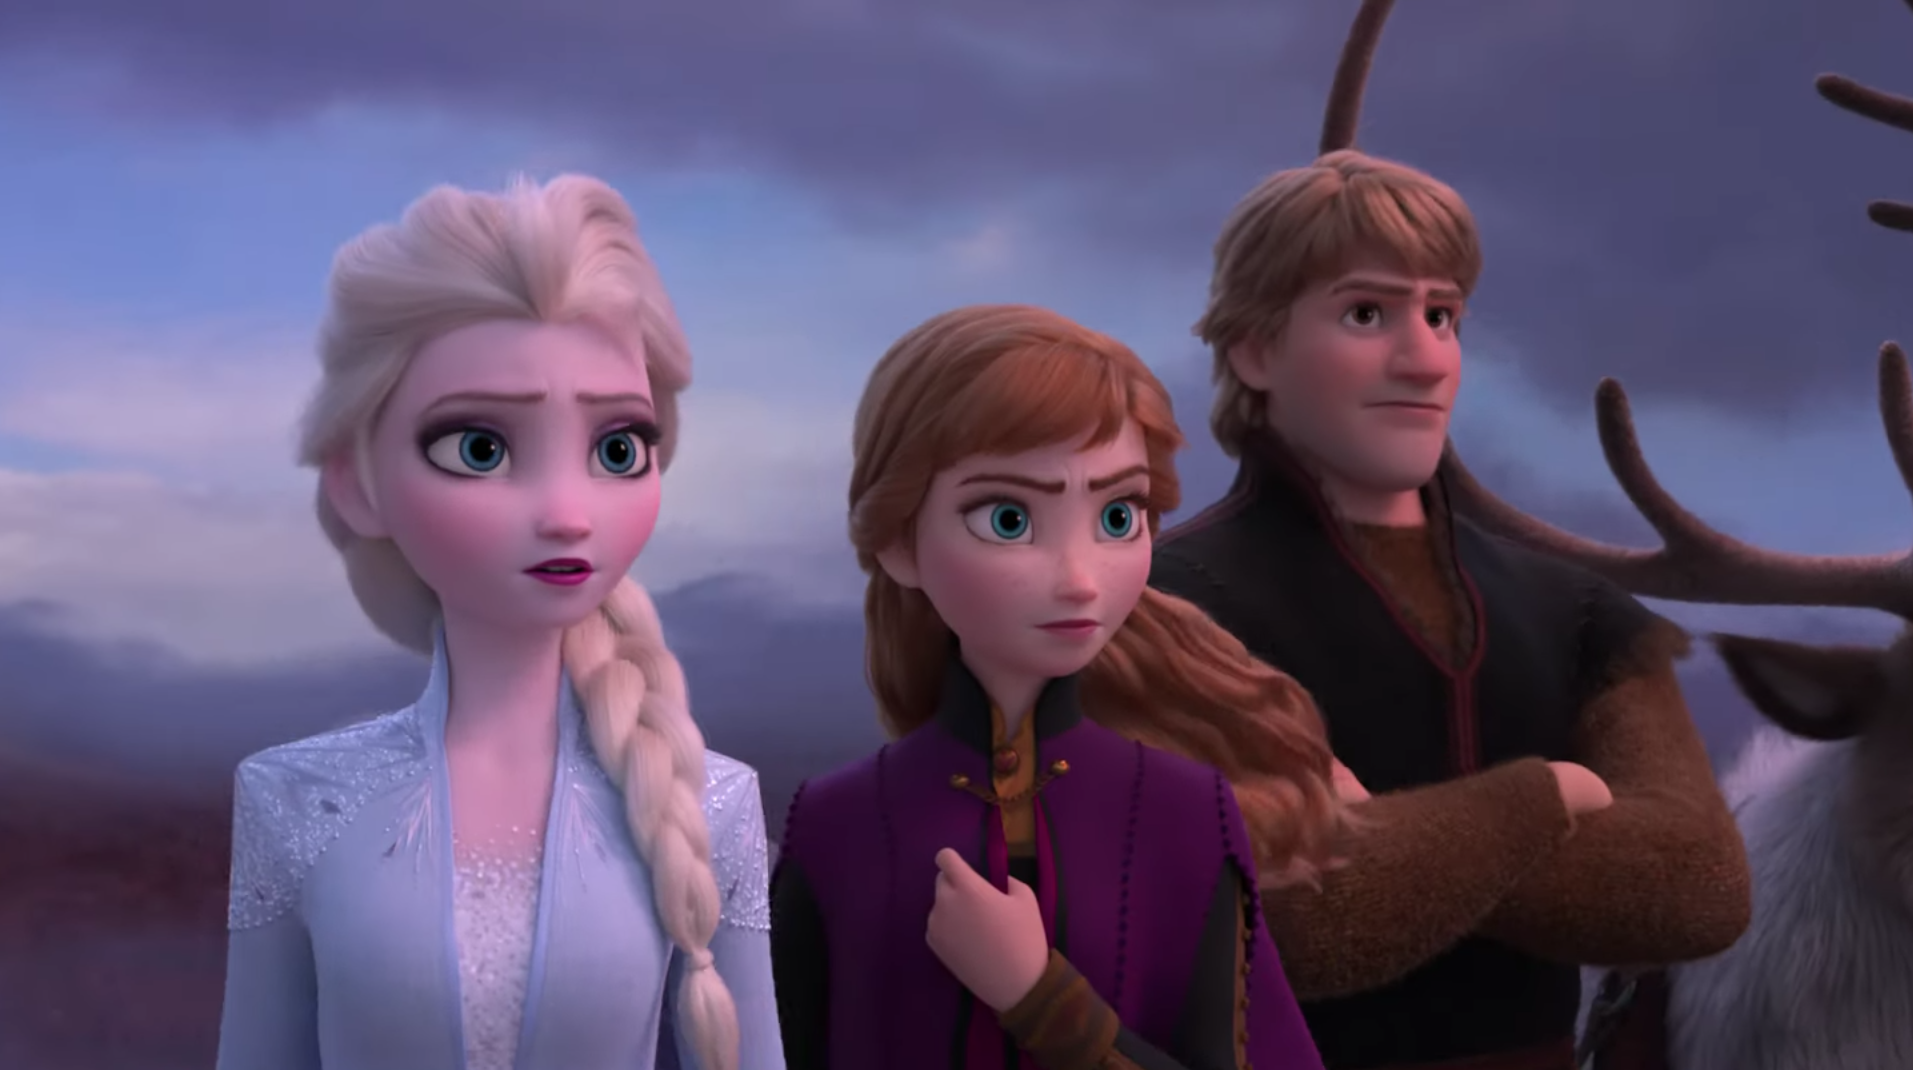 Frozen: Personagem tem segredo macabro que a Disney esconde